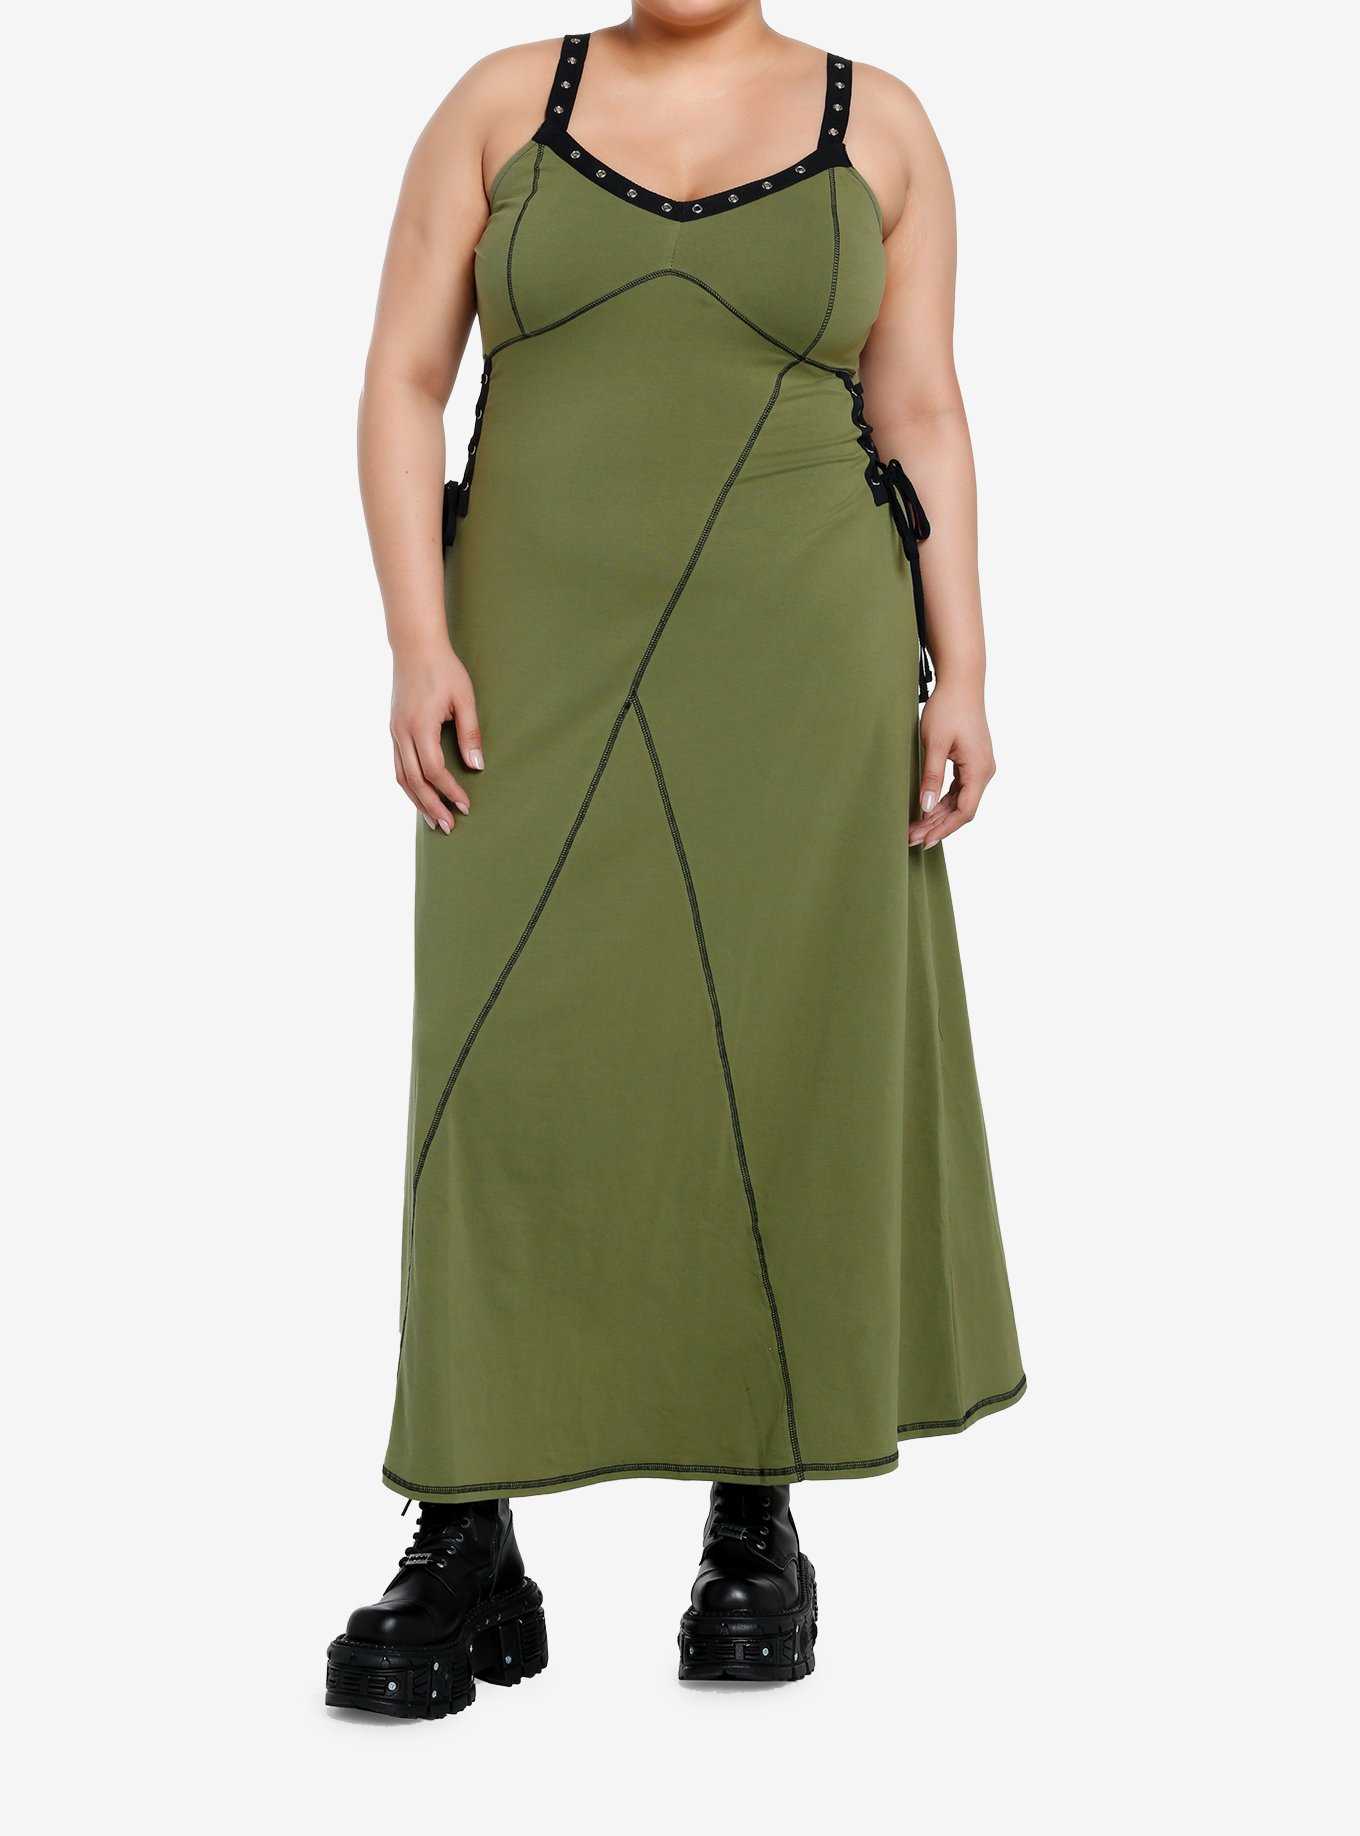 Social Collision Green & Black Lace-Up Midaxi Dress Plus Size, , hi-res